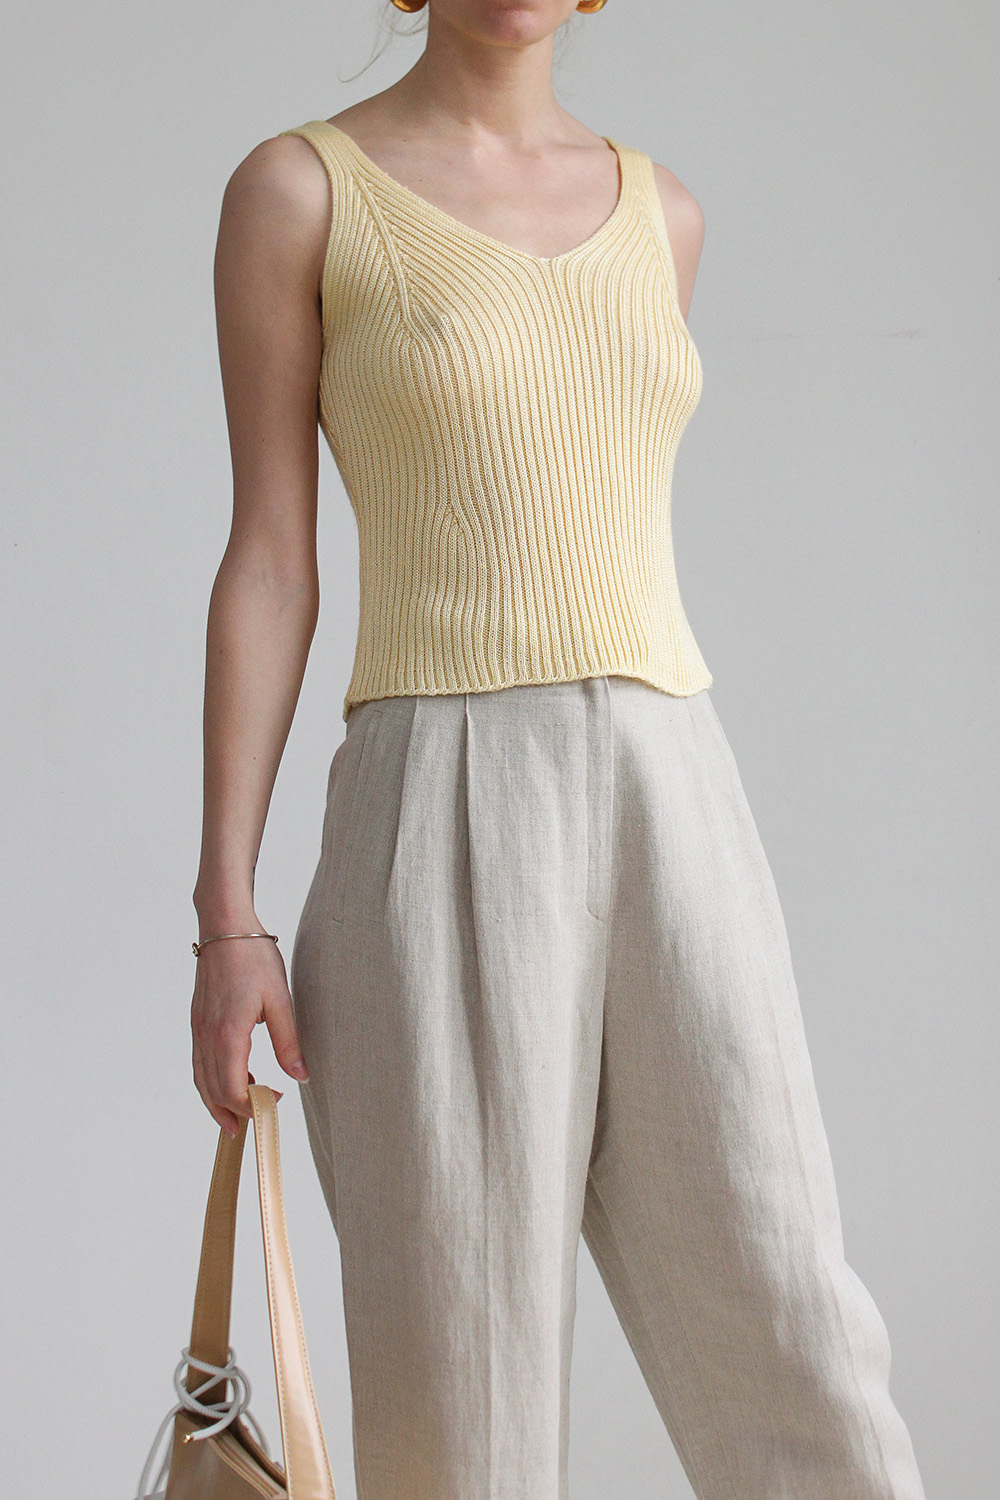 Pastel yellow knit jumper